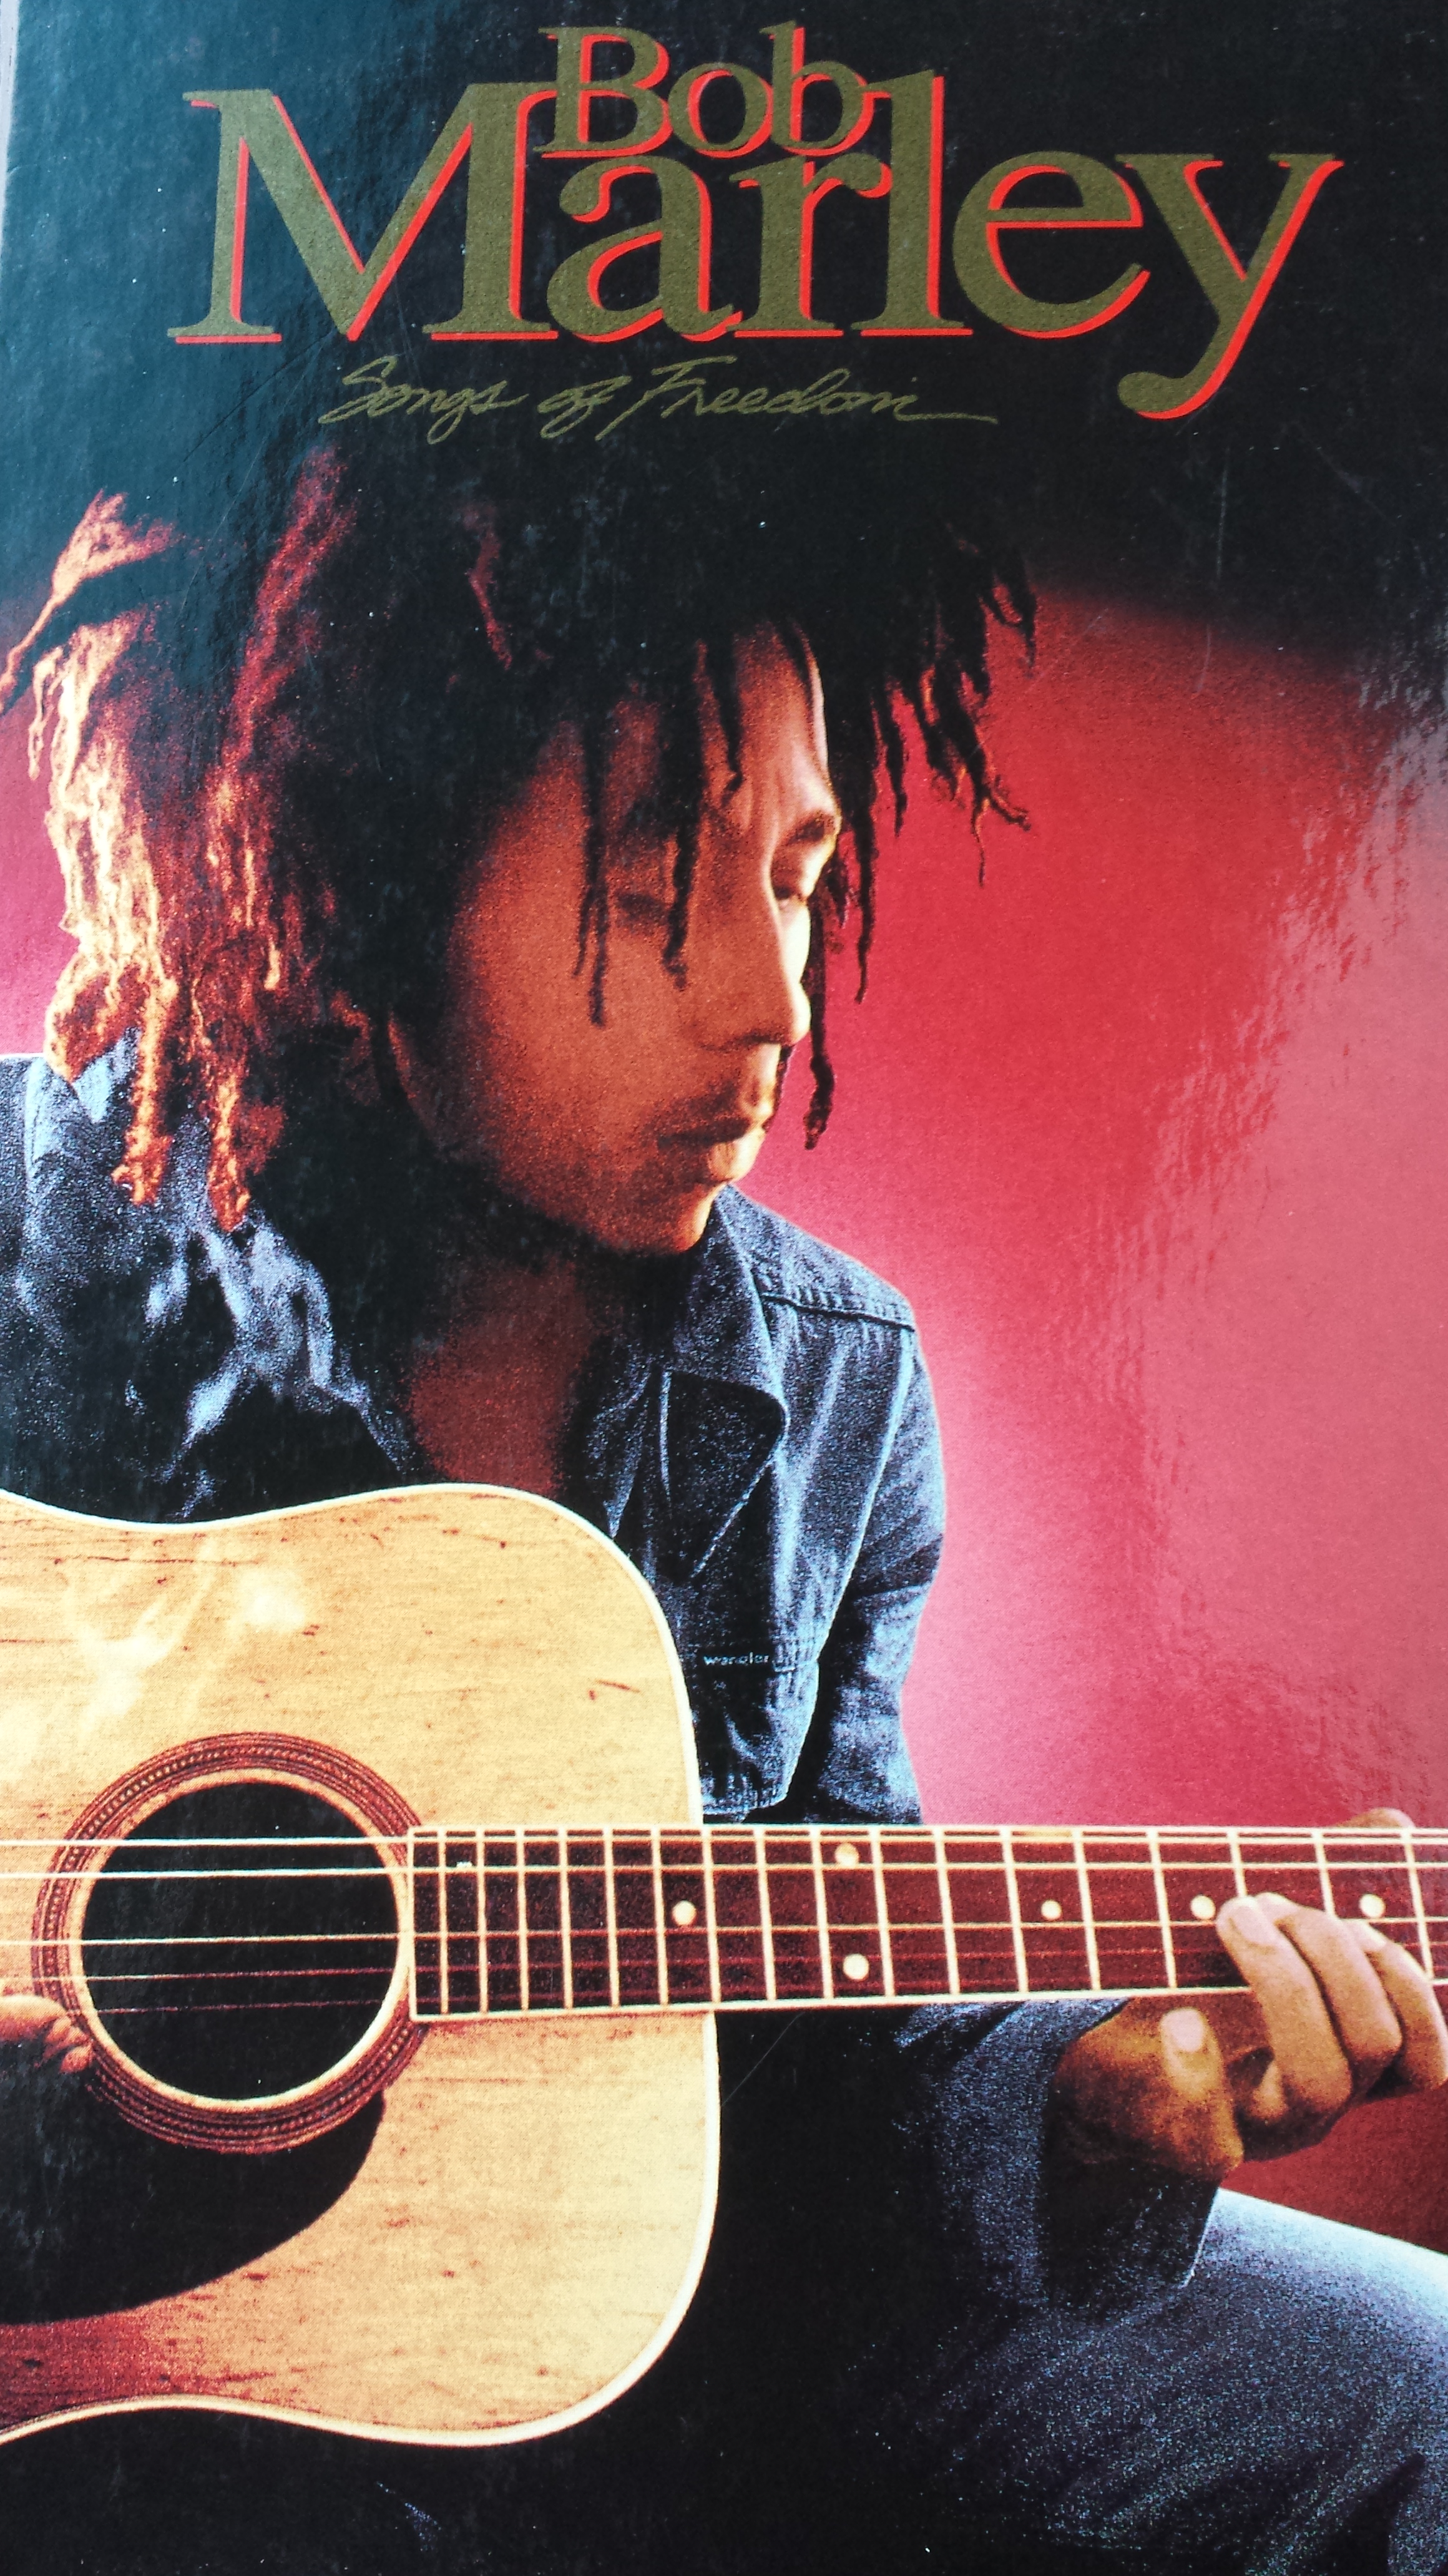 Bob Marley Songs of Freedom | Mikey 